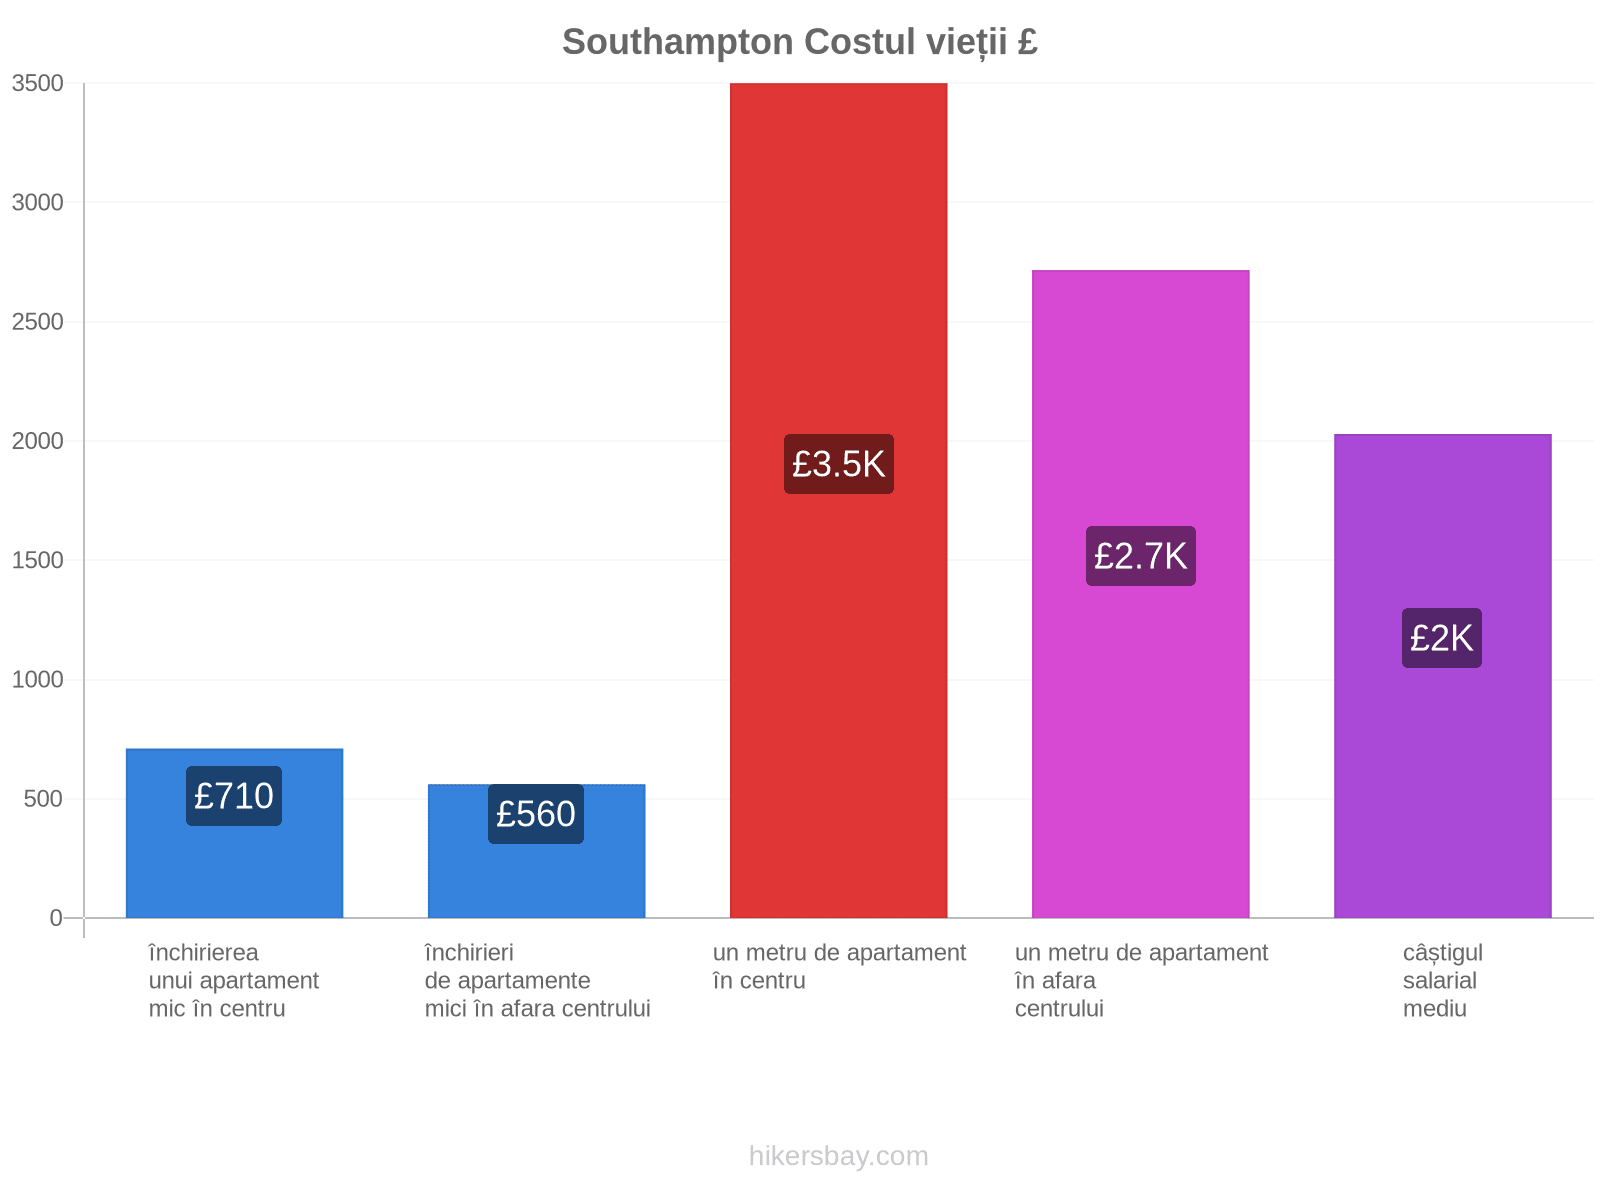 Southampton costul vieții hikersbay.com